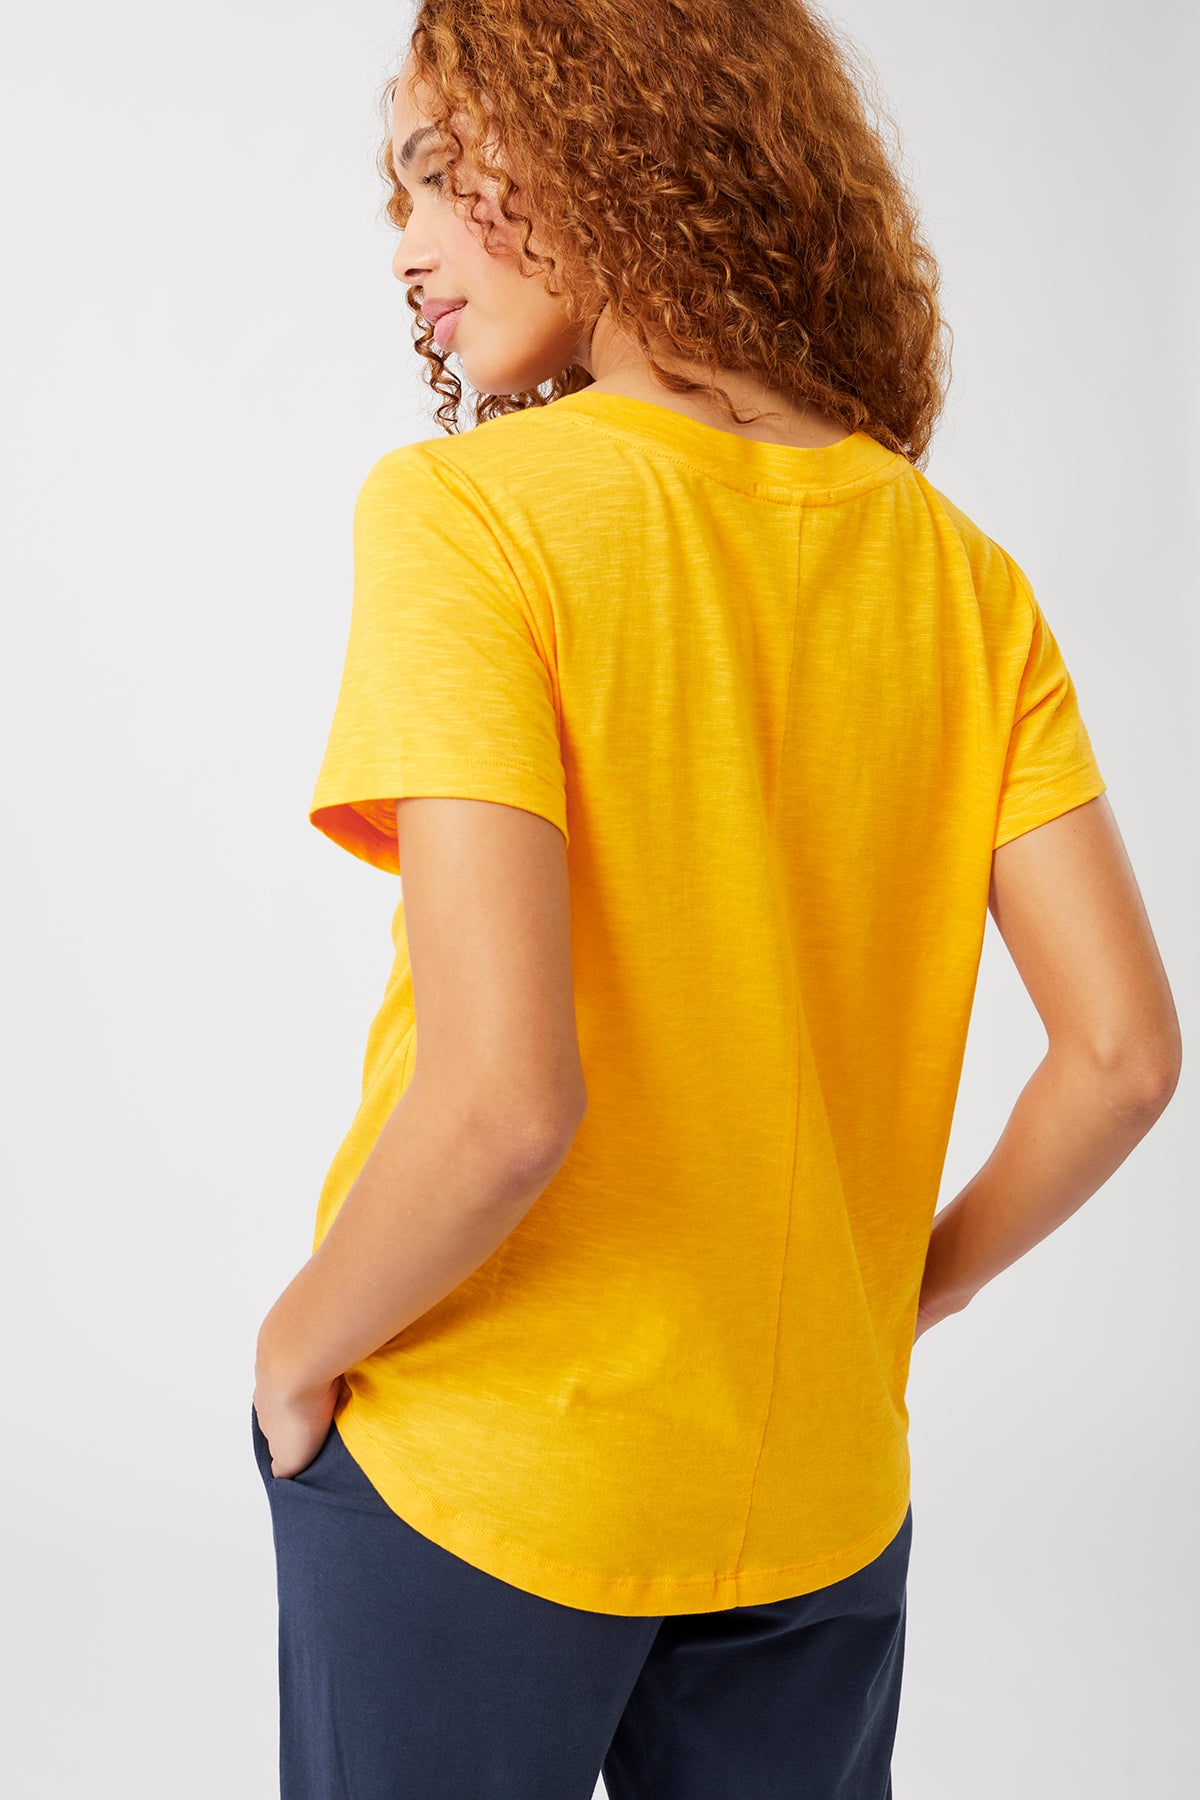 Mandala Yoga Shirt Gelb Rückseite - The New V-Neck